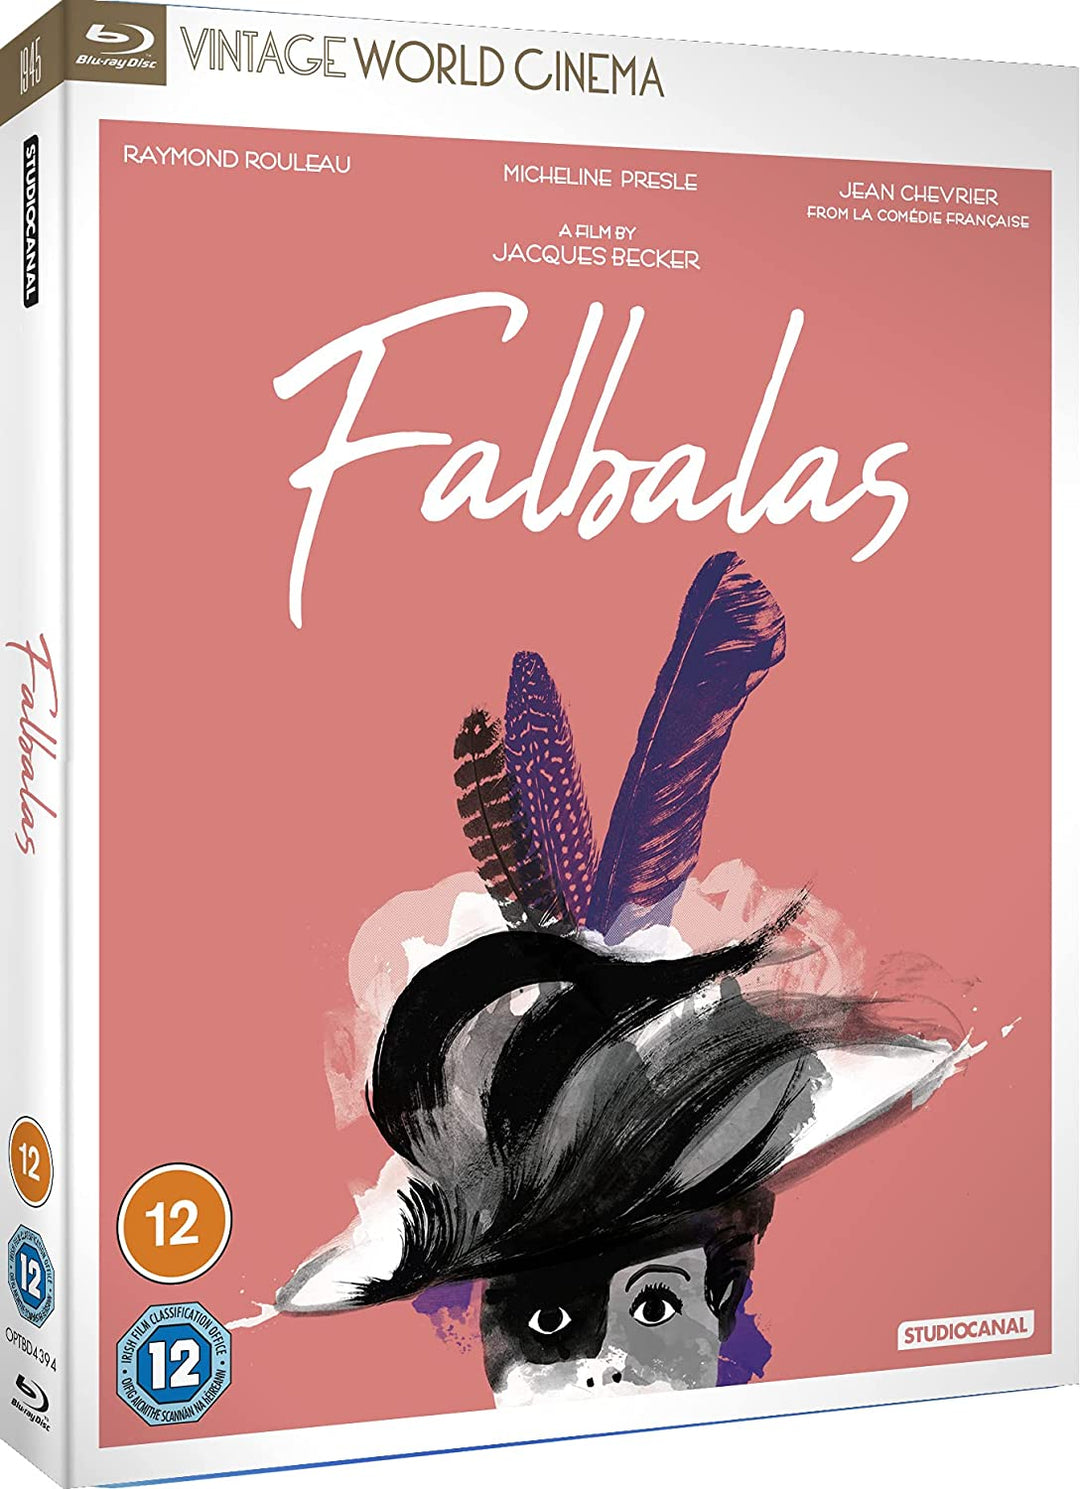 Falbalas (Vintage World Cinema) – Drama/Romanze [BLu-ray]